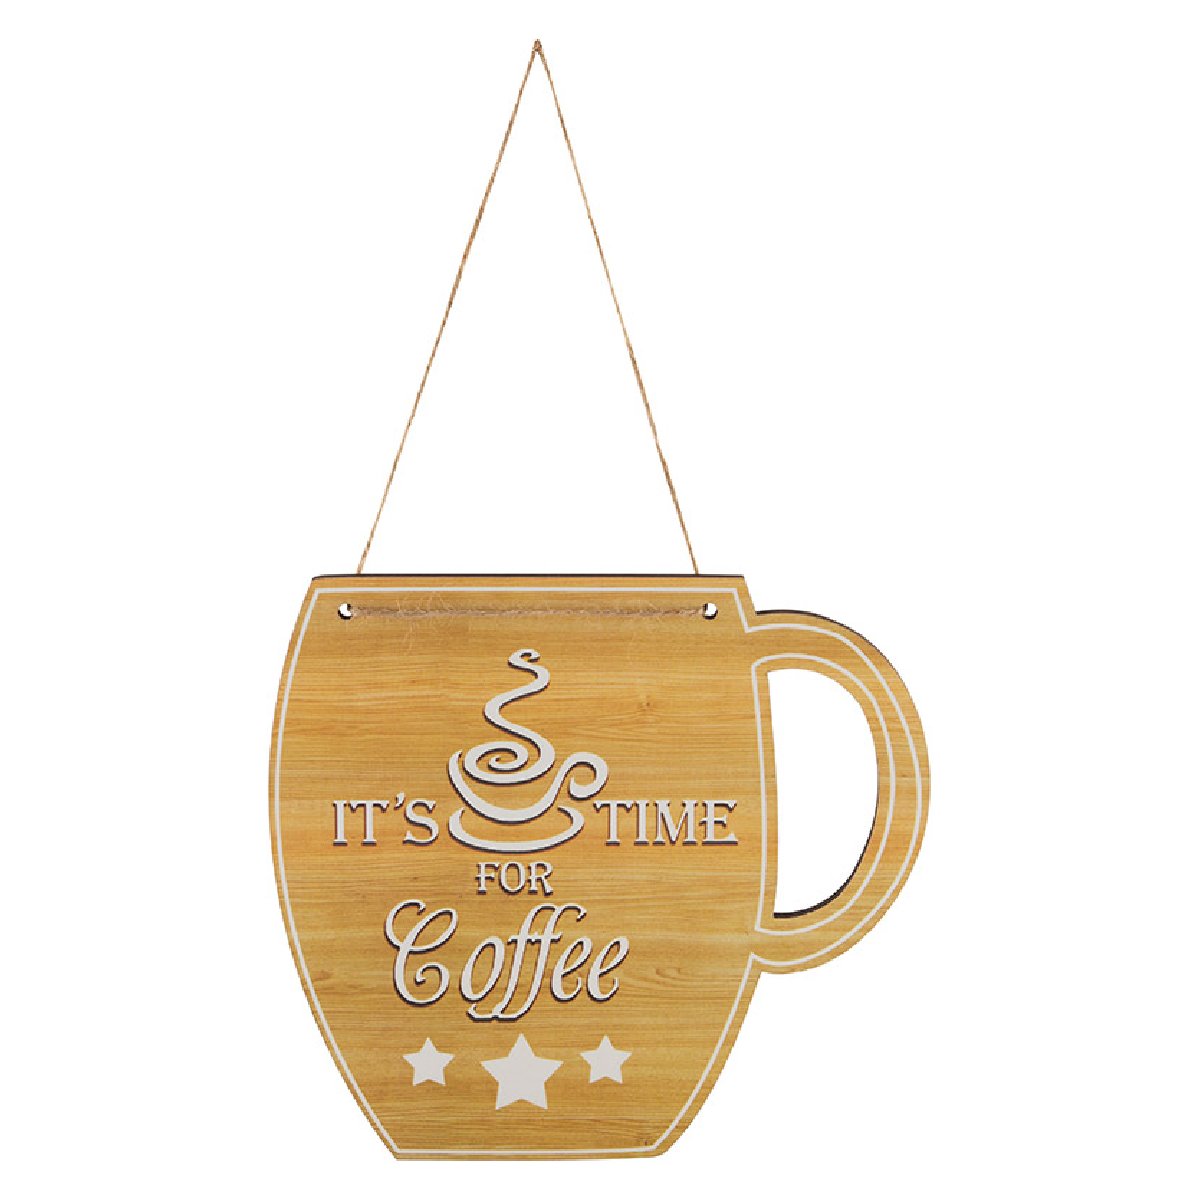 Табличка декоративная It s time for Coffee ИТ-031 Волшебная страна (006725)Купить